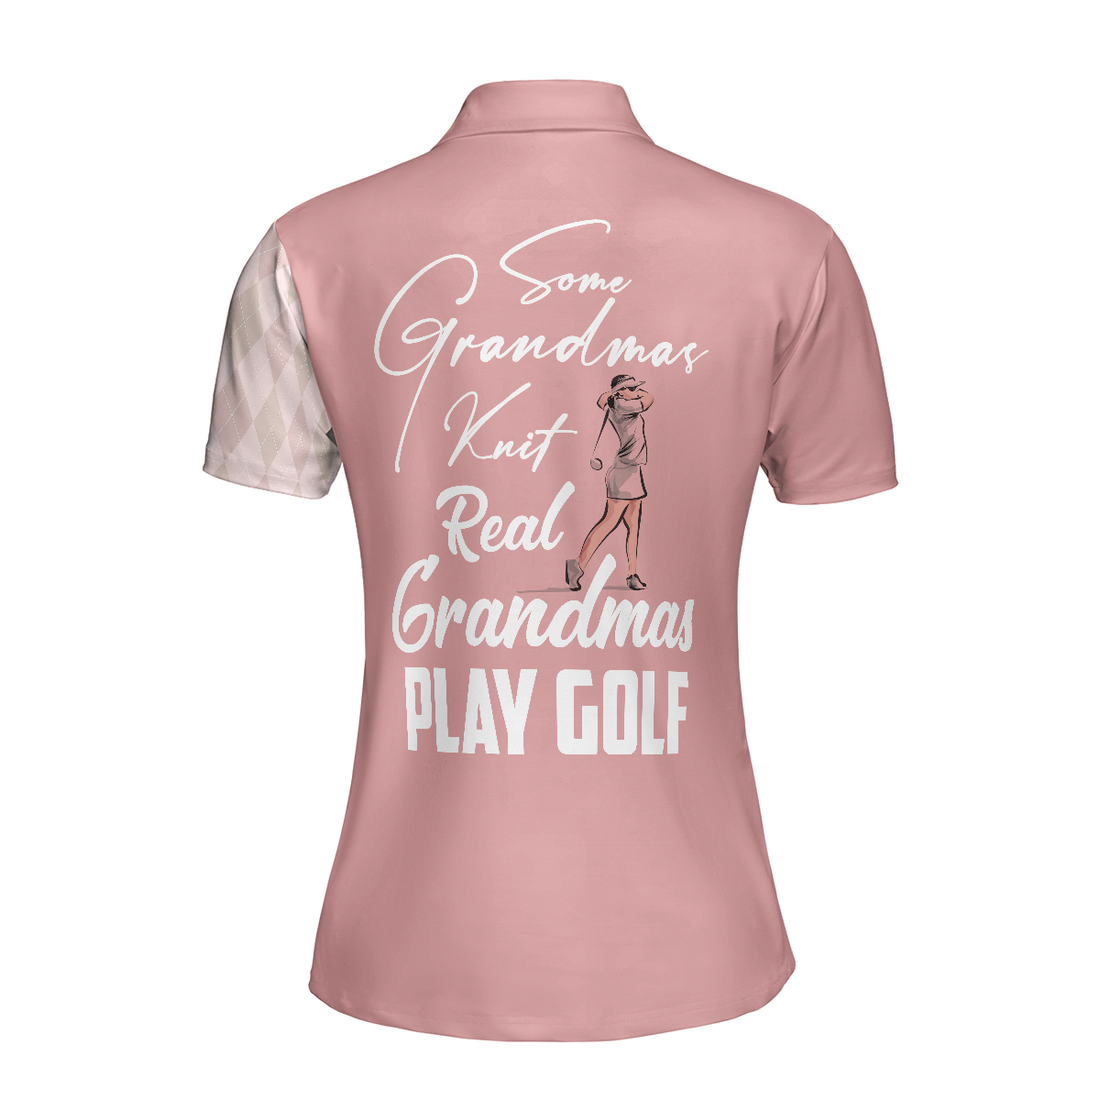 Some Grandmas Knit Real Grandmas Play Golf Short Sleeve Women Polo Shirt Light Pink Golf Shirt For Ladies - 1